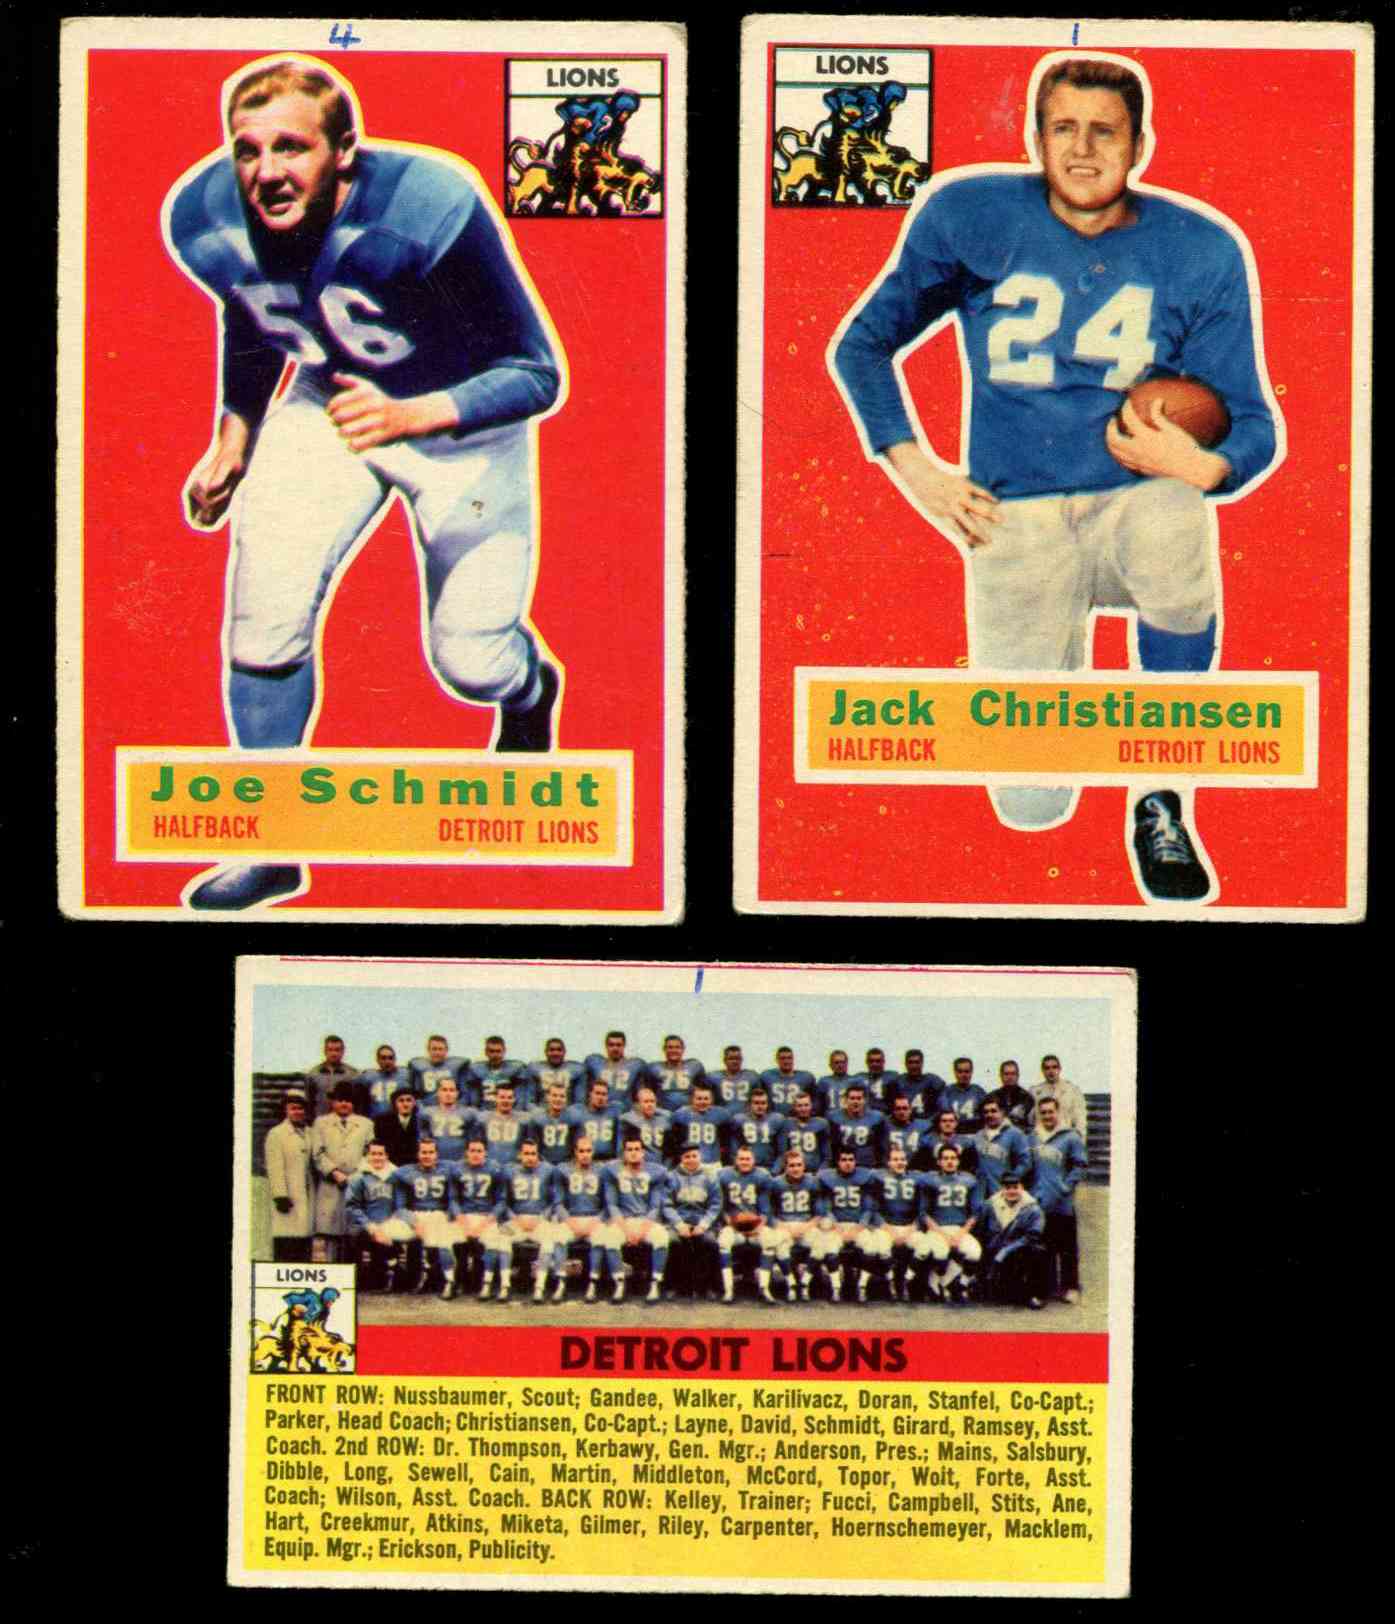  Detroit LIONS - 1956 Topps Football Team Lot (5) w/Team card Football cards value